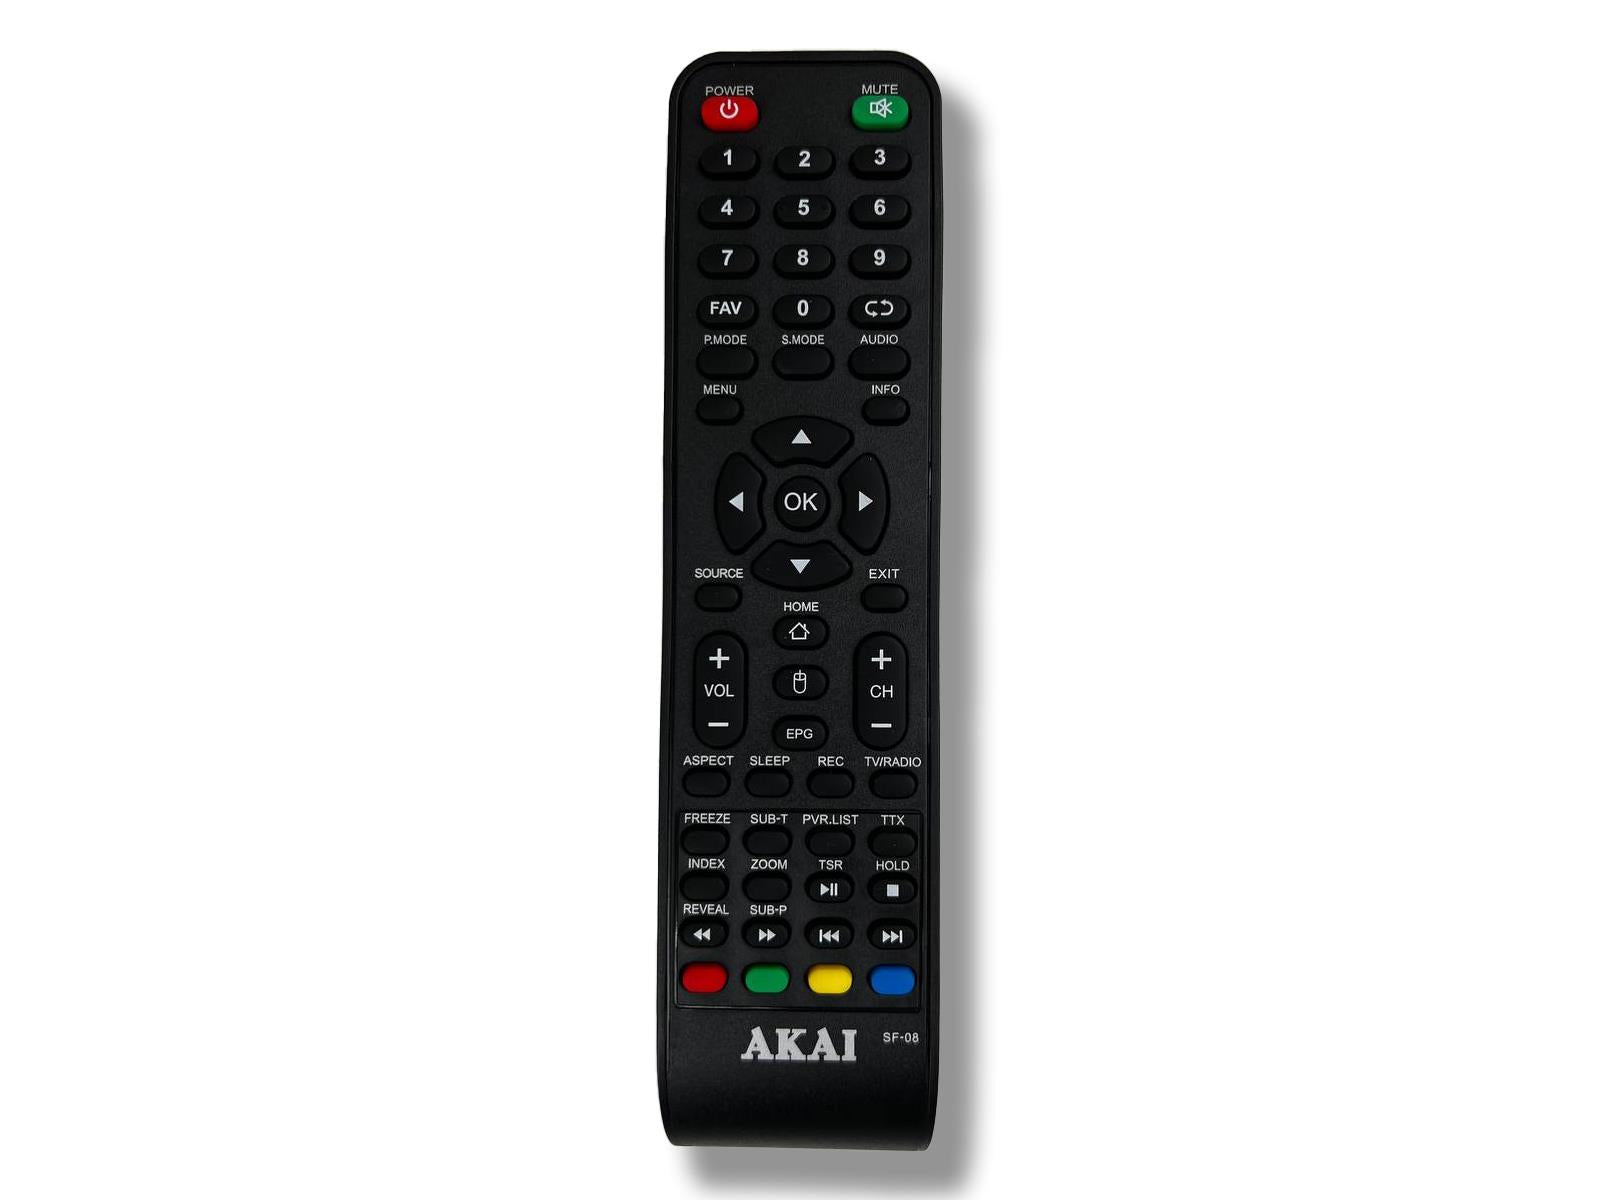 AKAI 39-inch Smart TV |AKTV3922S|